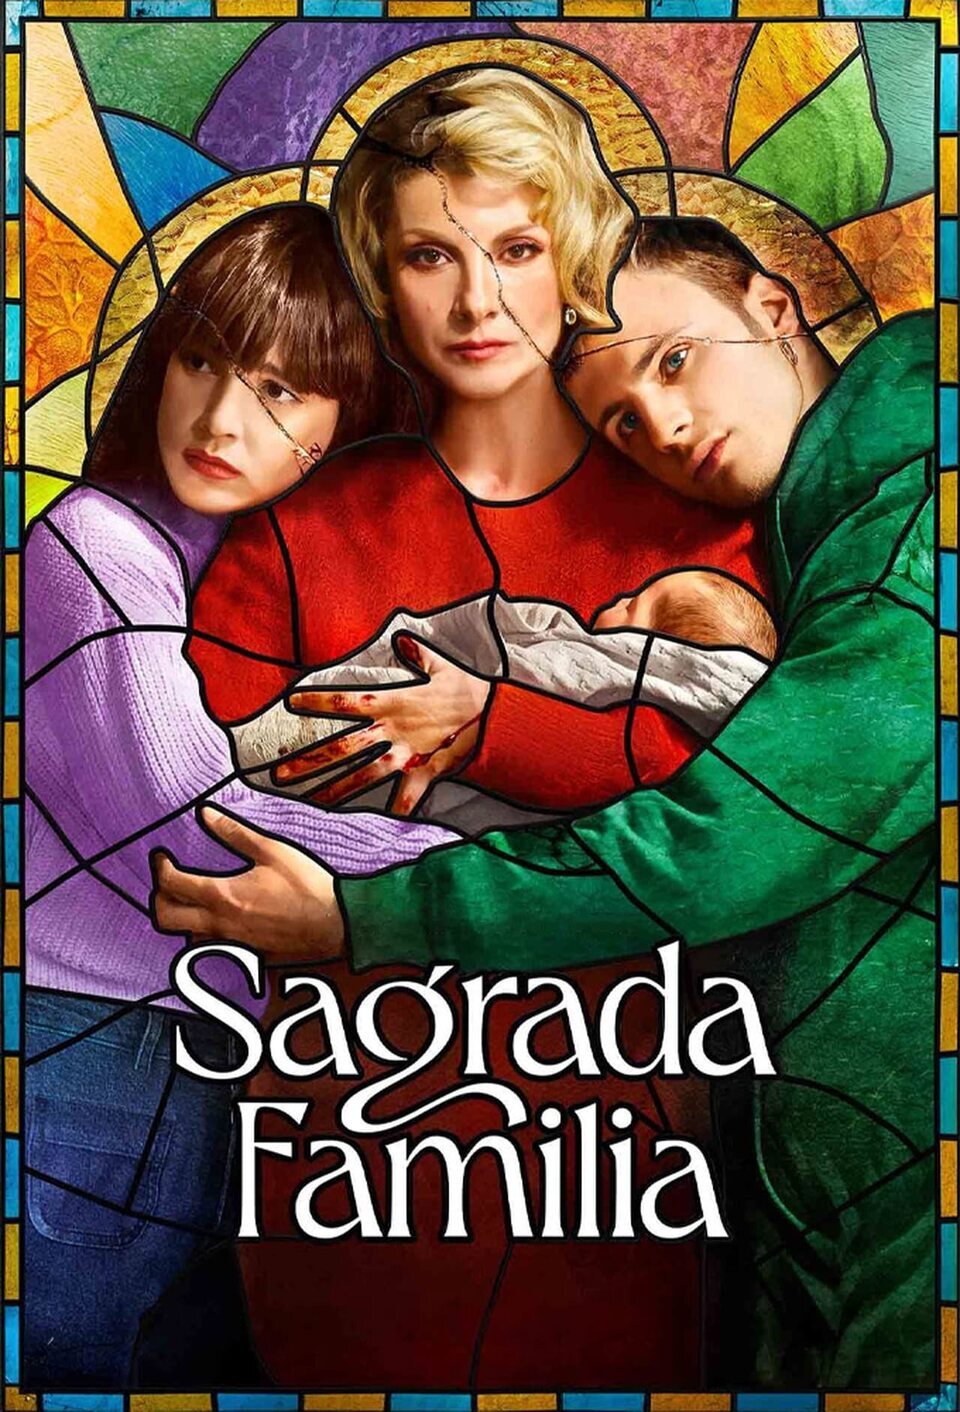 Cartel de Sagrada familia - Temporada 1